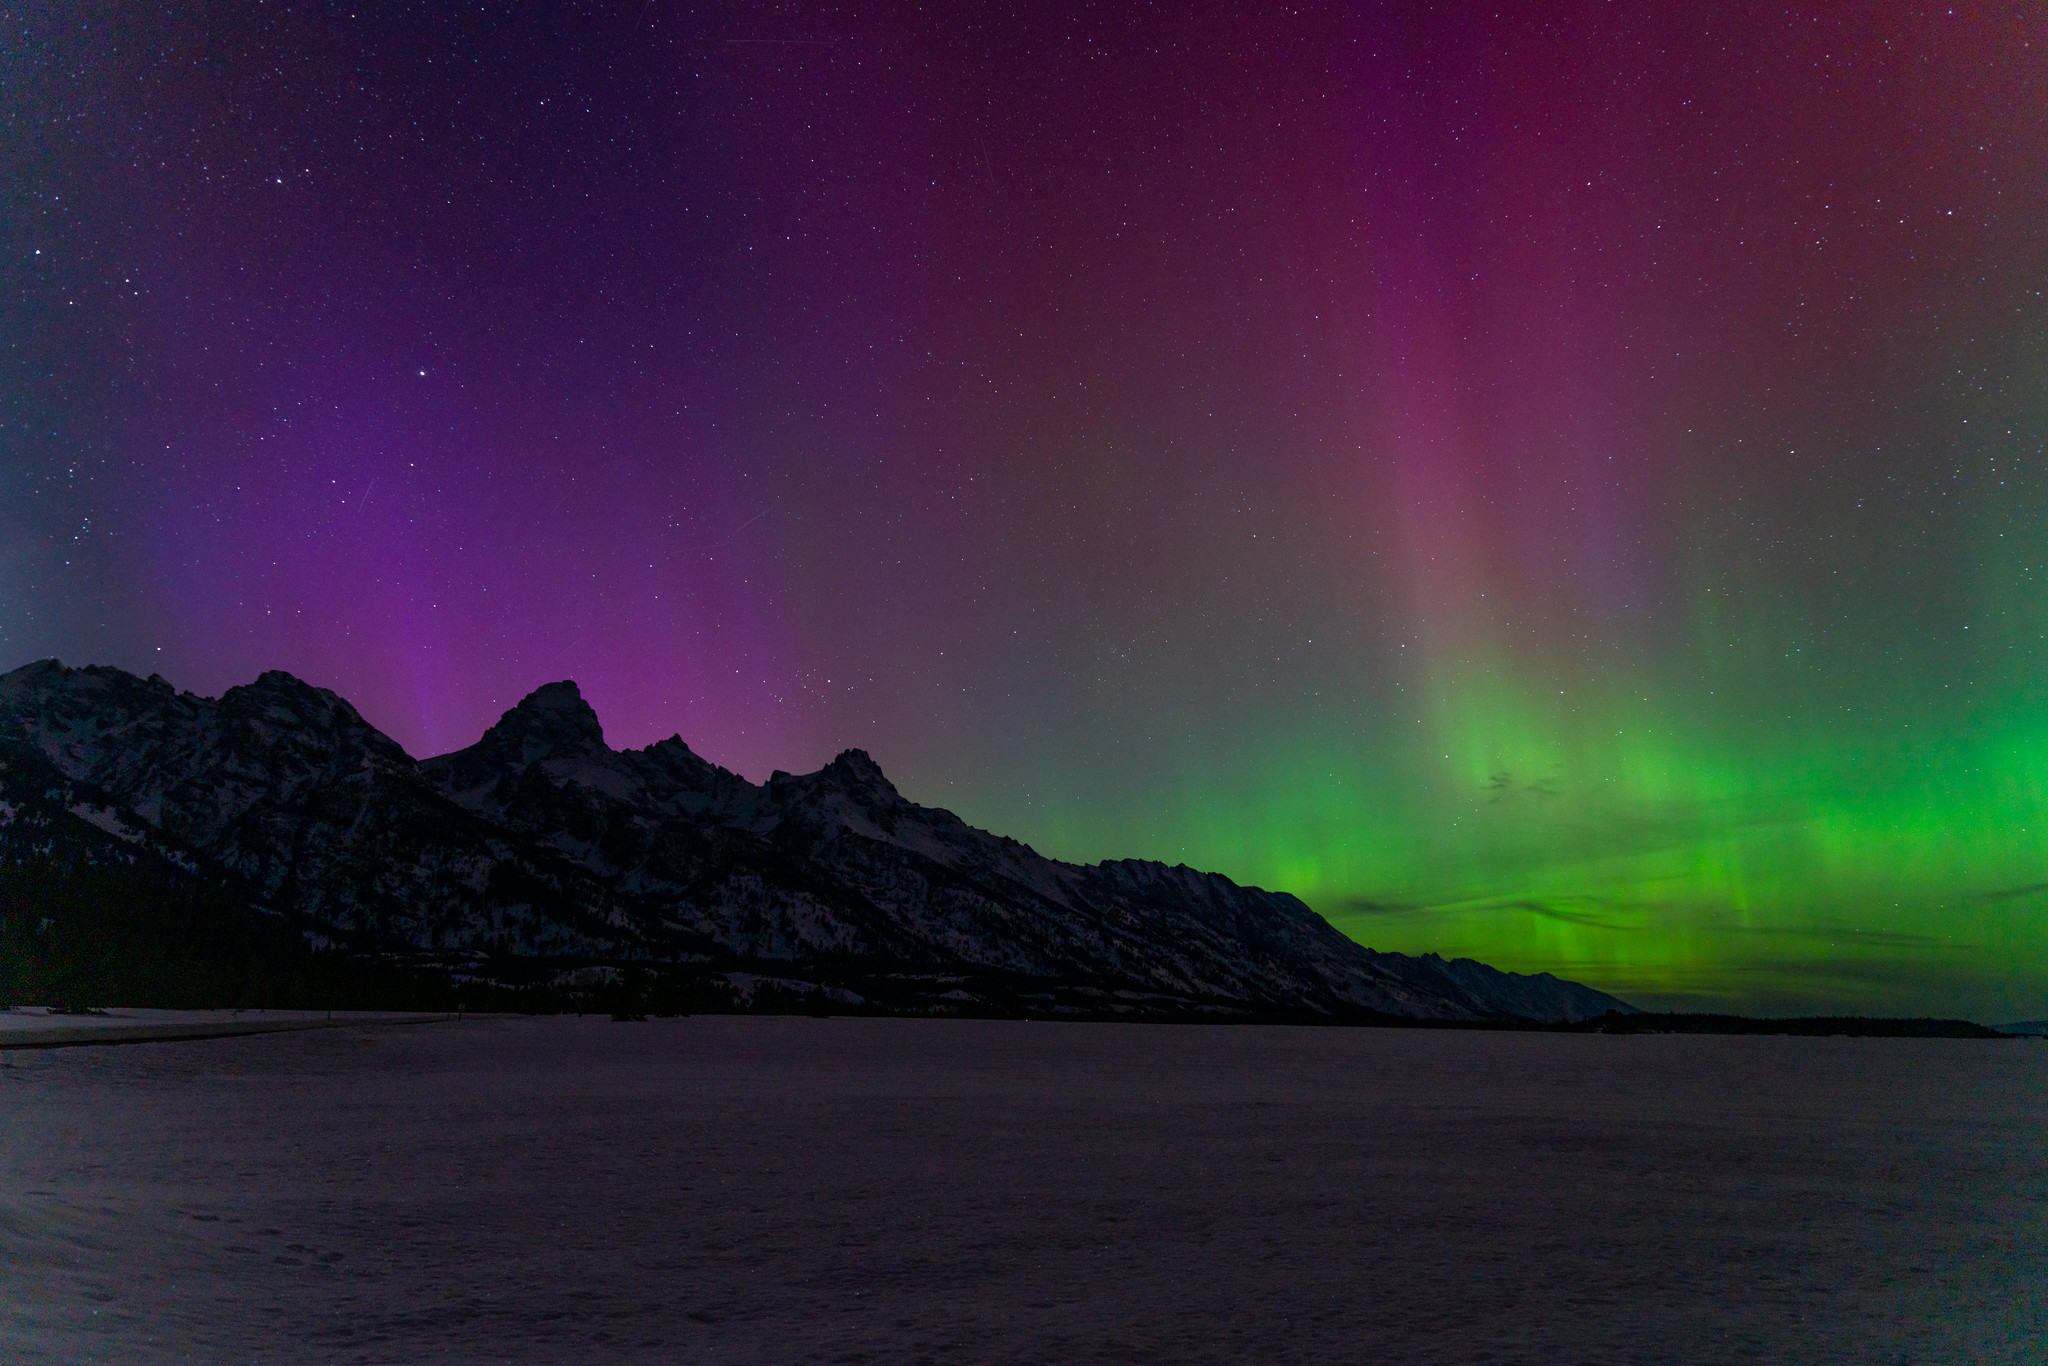 Purple and green aurora borealis dance in the sky above Grand Teton National Park